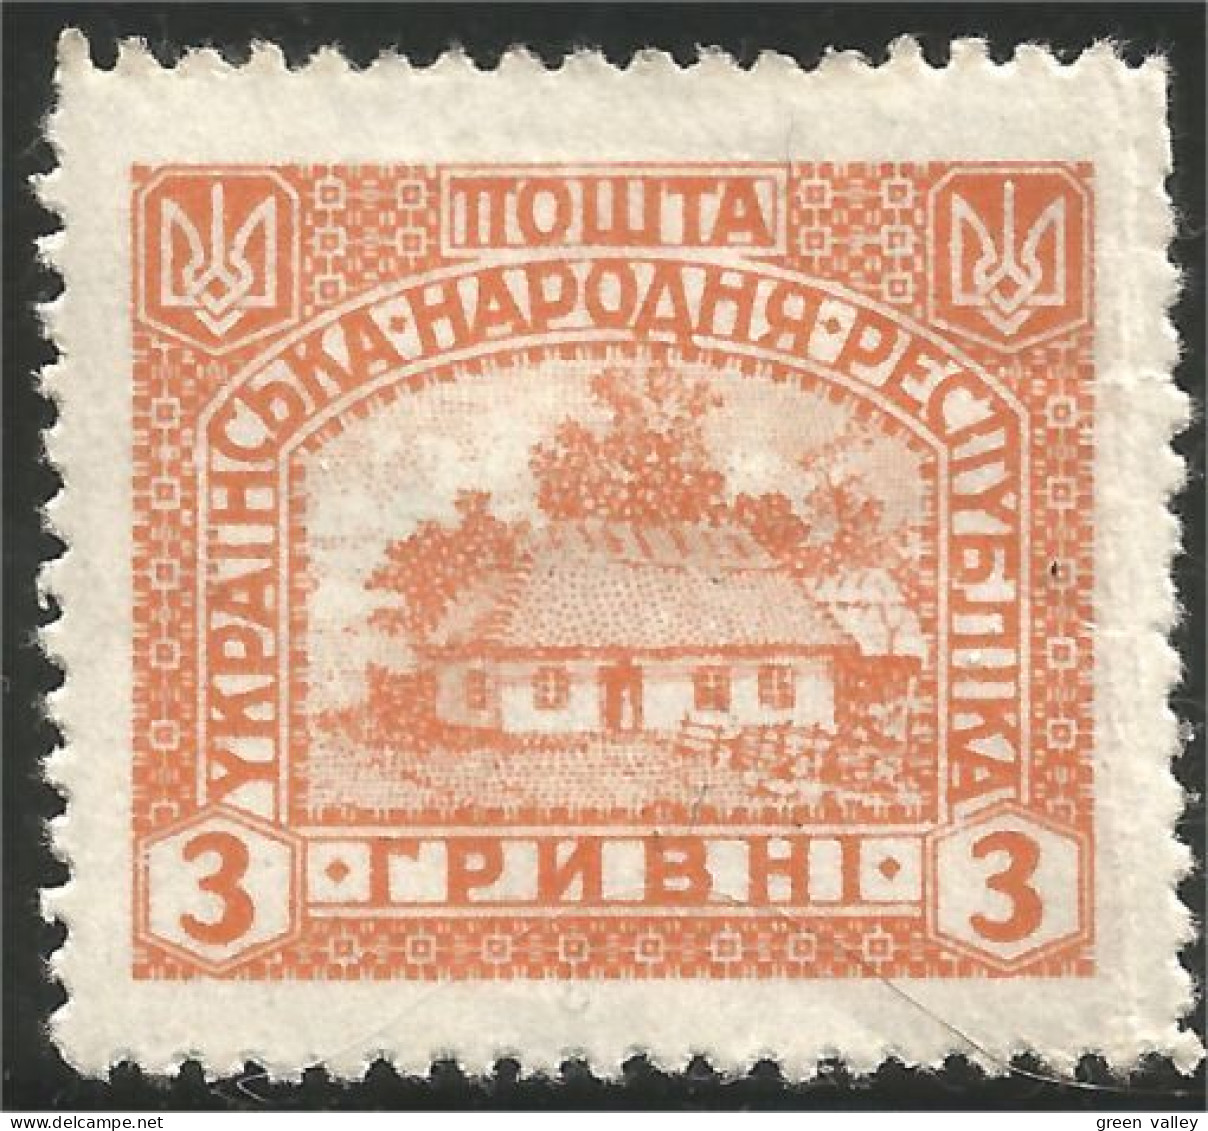 900 Ukraine 1920 3R MH * Neuf (UKR-32) - Ukraine